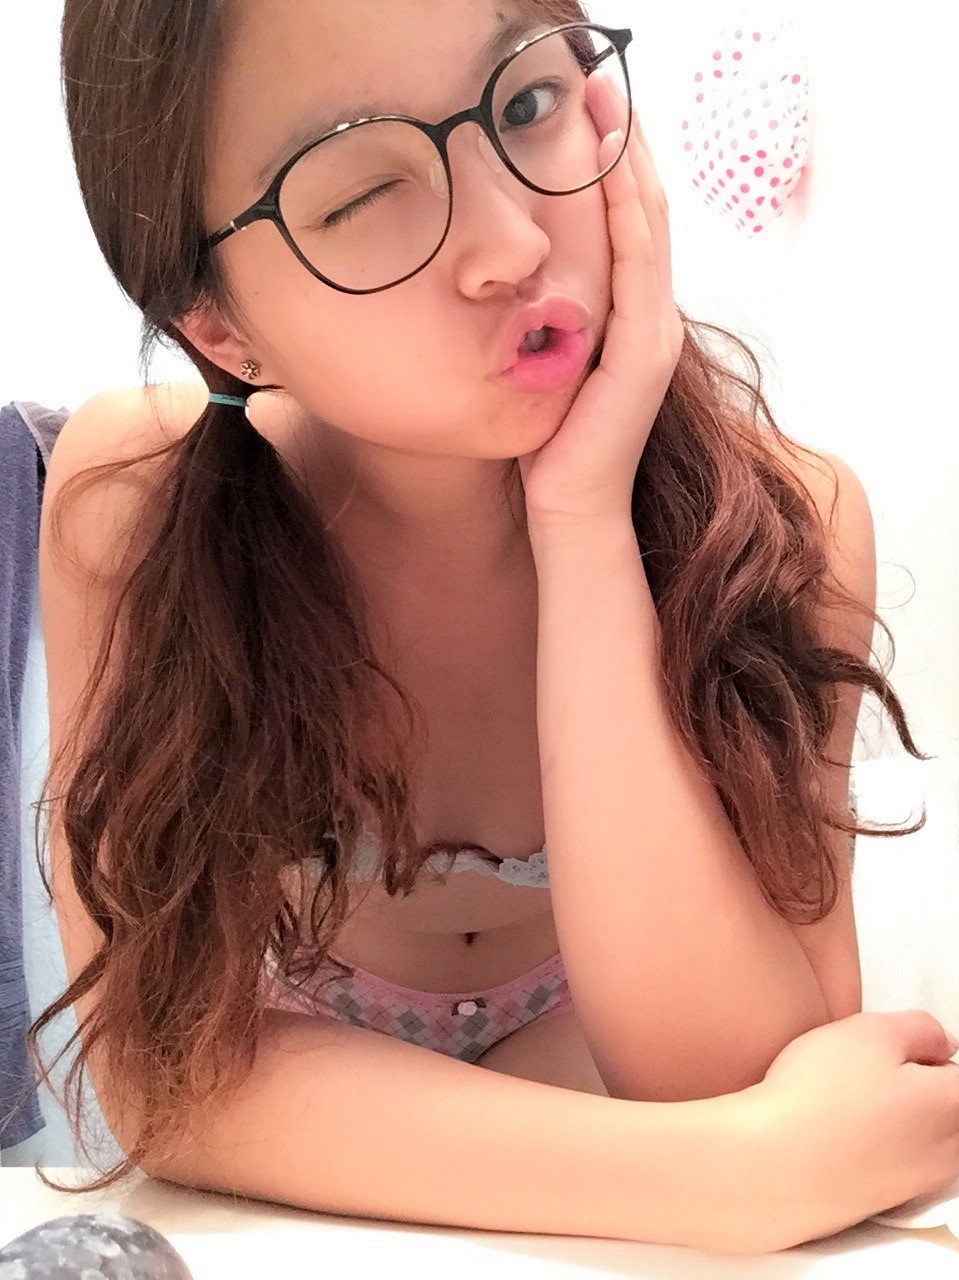 Tumblr Petite Porn - Petite Asian Teen Takes Nude Selfies - tumblr_oea09q8gXG1tfy7u0o6_1280 Porn  Pic - EPORNER